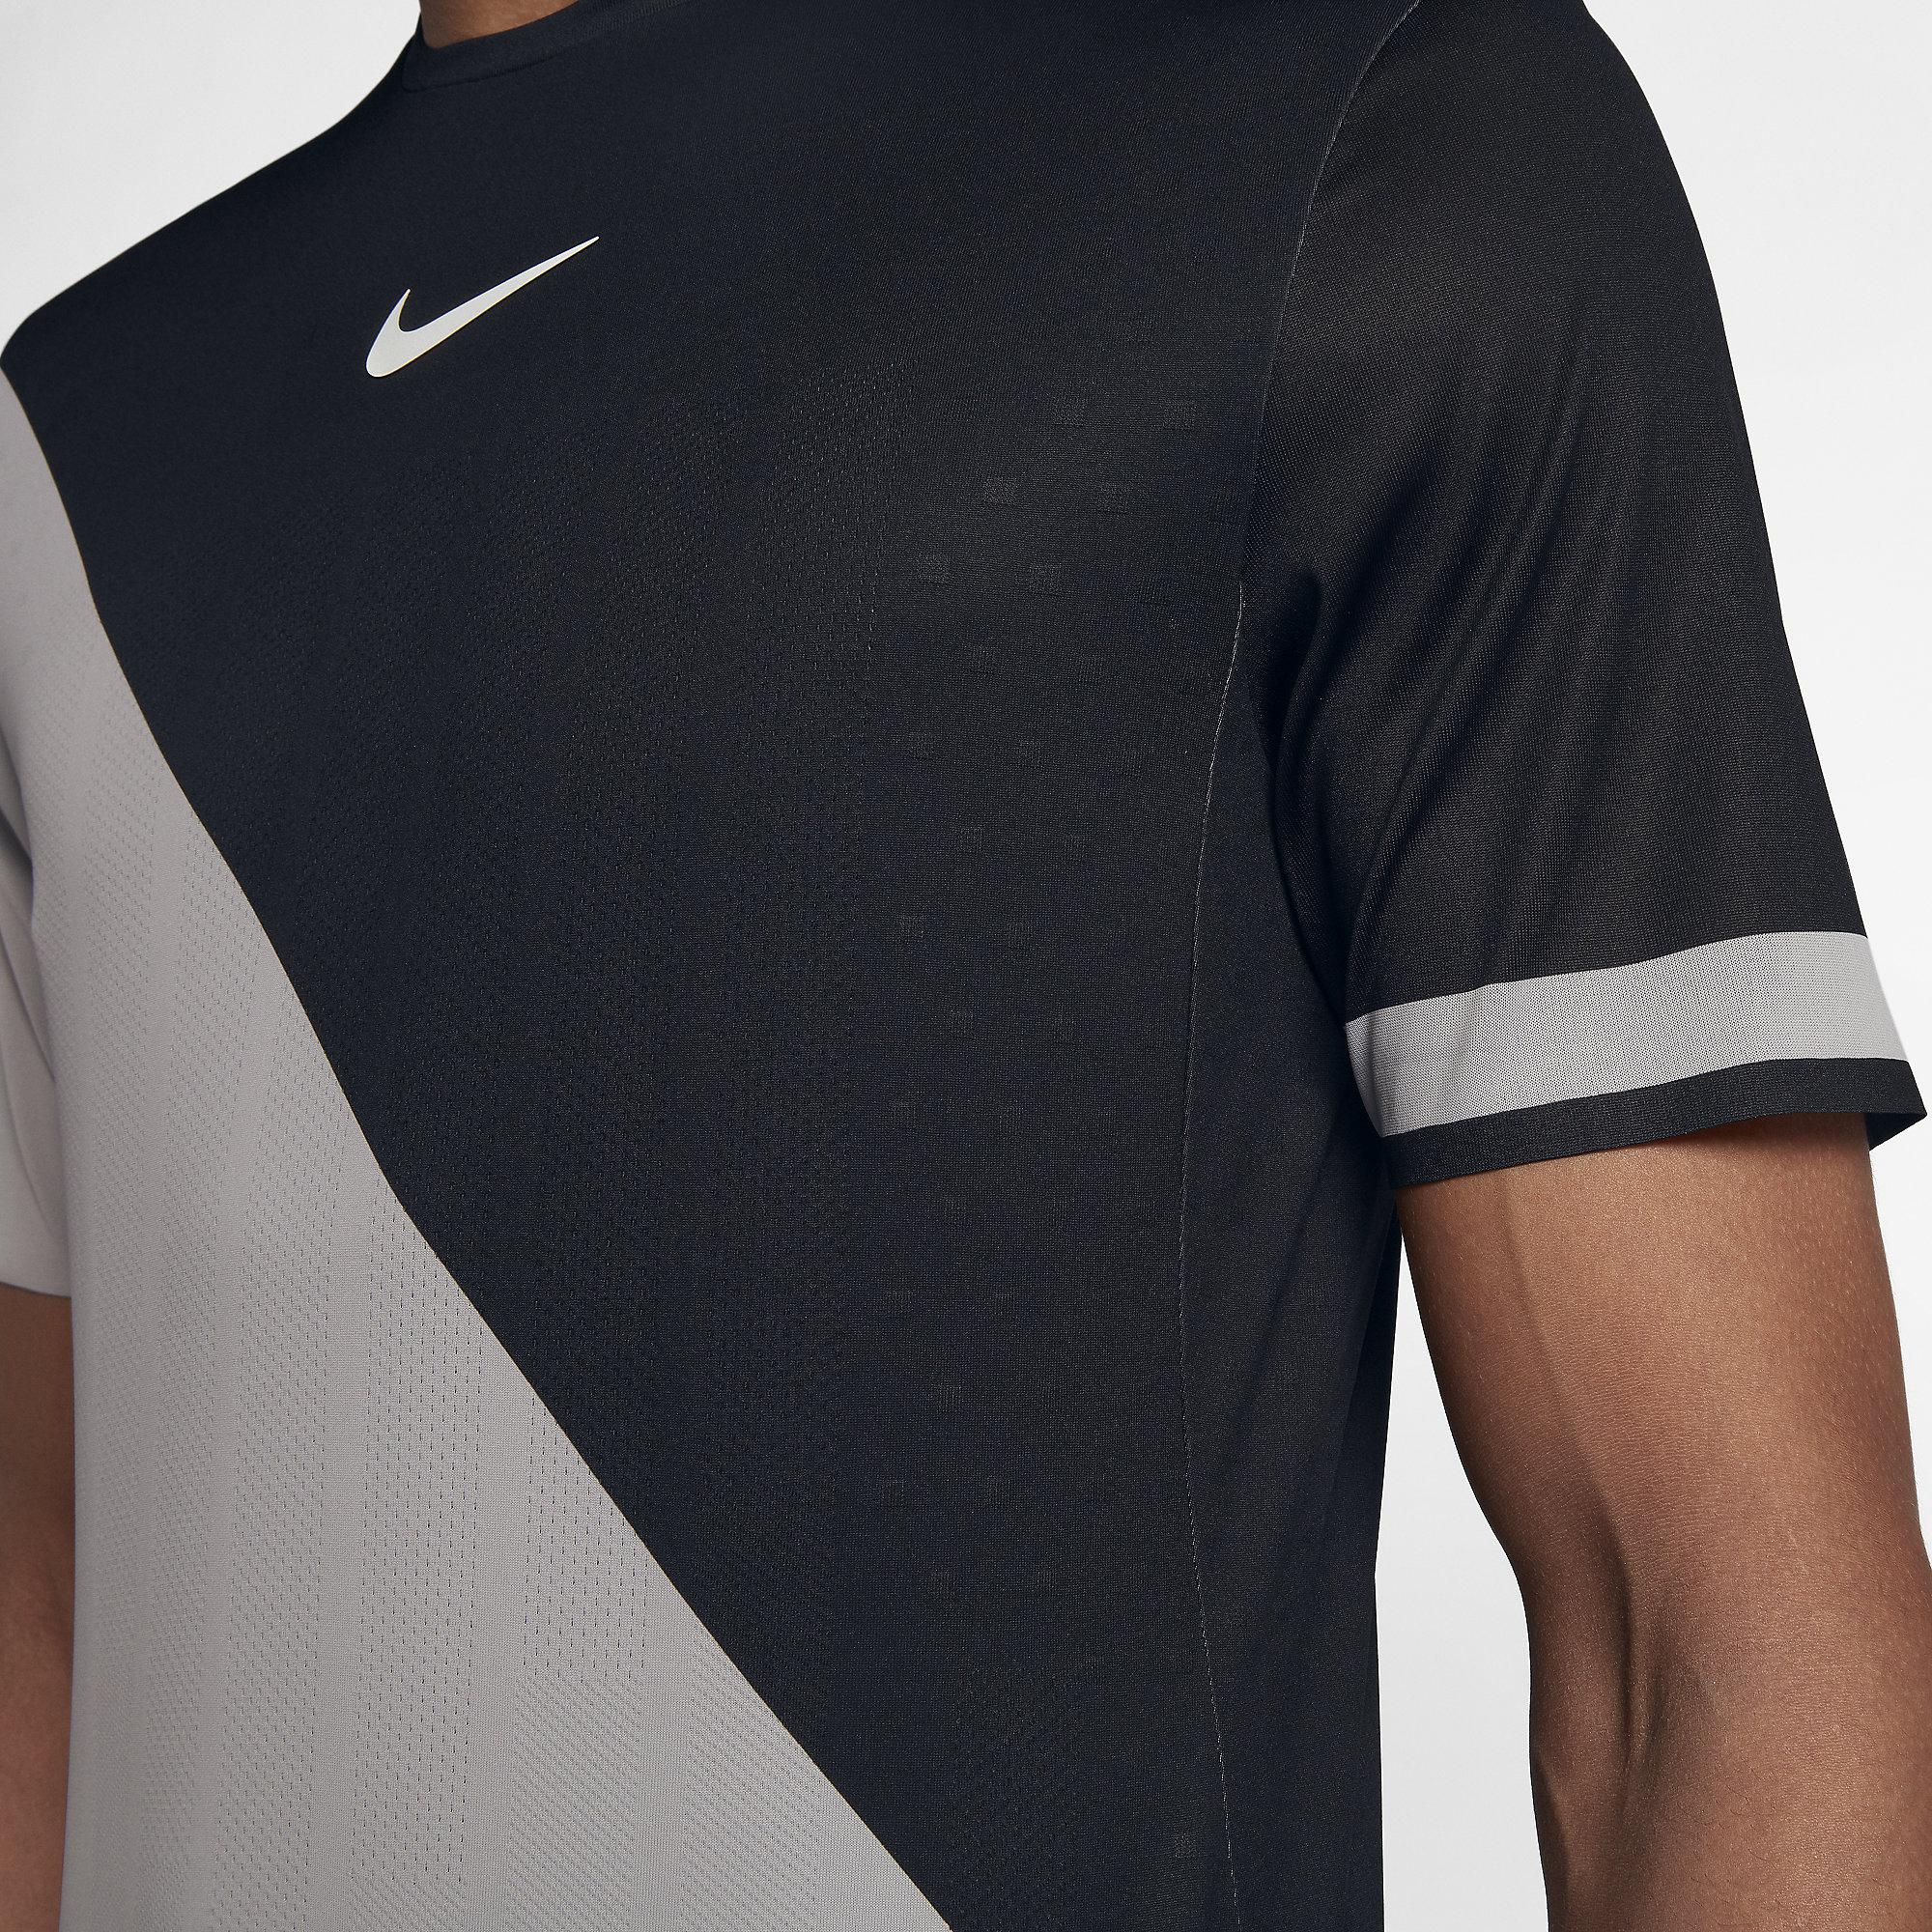 Nike Mens Zonal Cooling Challenger Tennis Top - Black/Grey - Tennisnuts.com